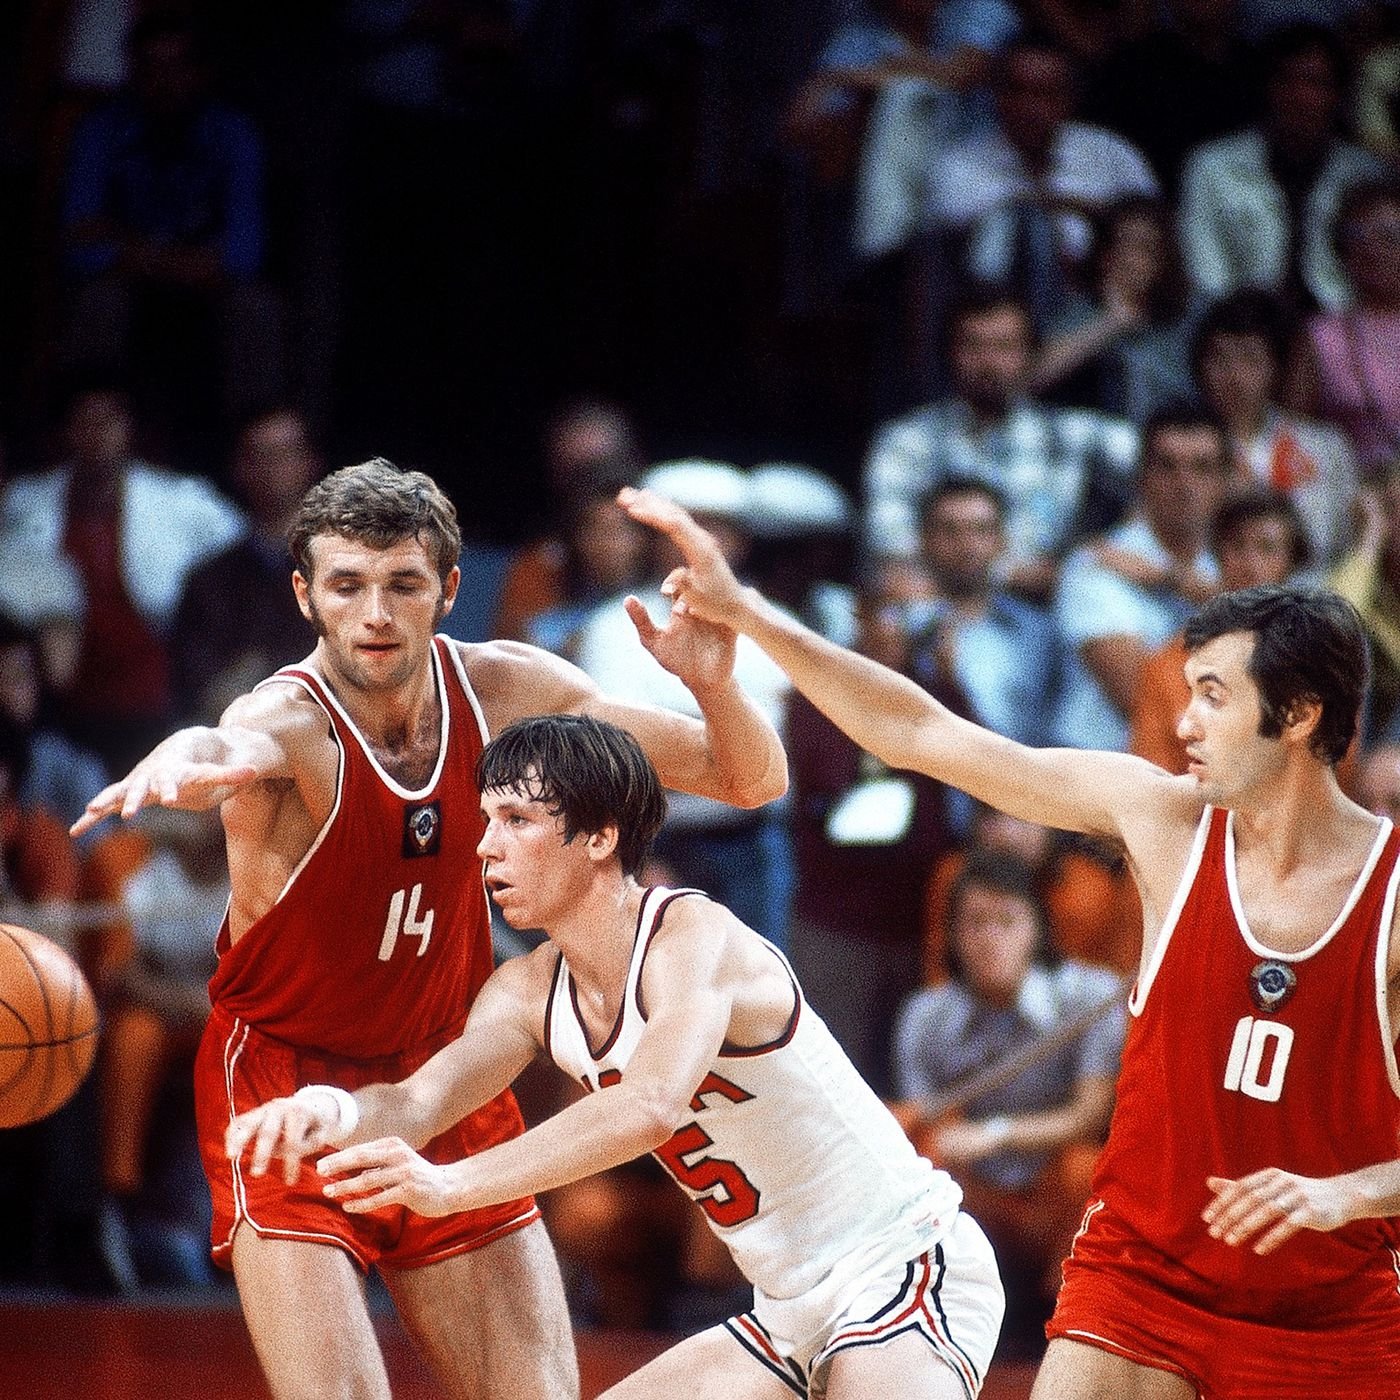 Игры 1972 баскетбол. Баскетбол 1972 финал СССР США. Баскетболист литовец 1972.